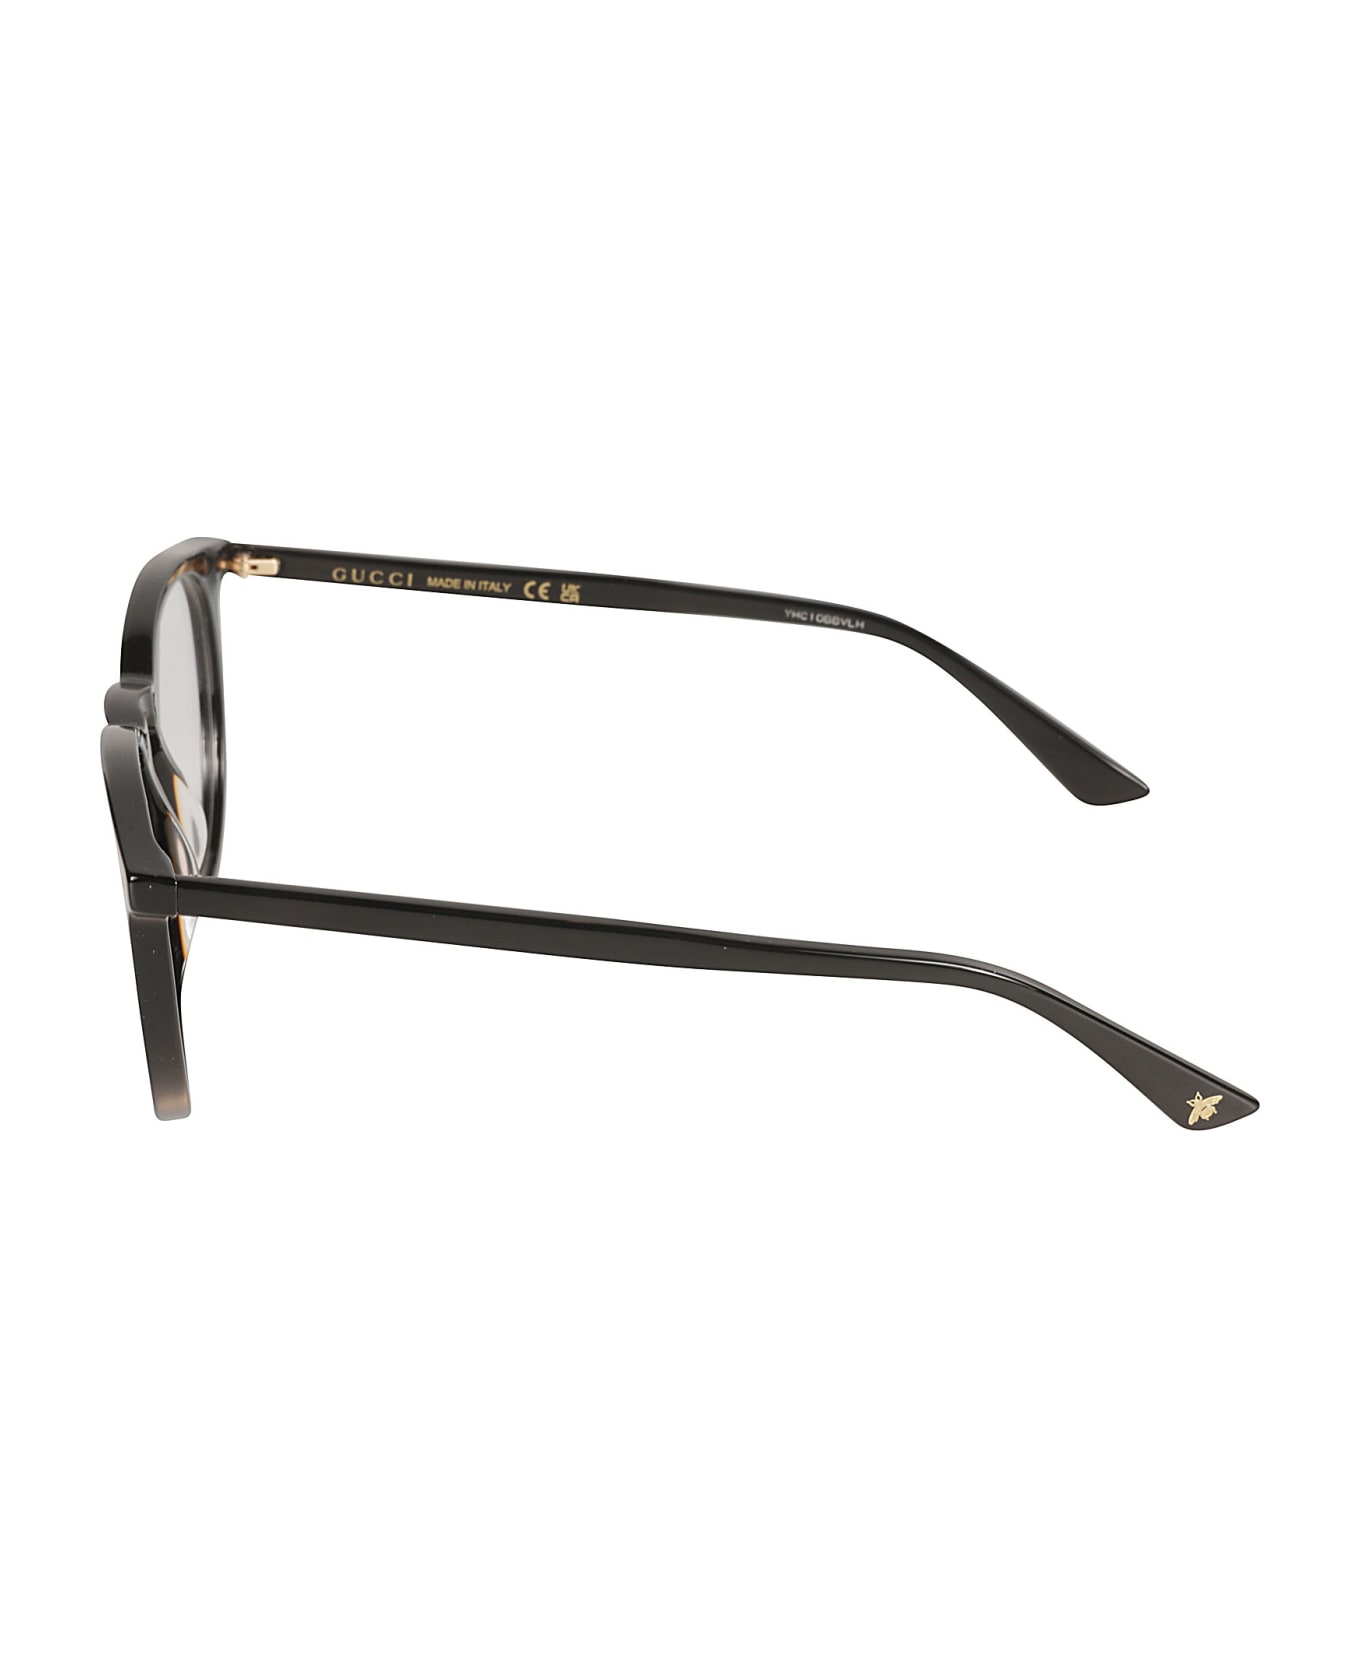 Gucci Eyewear Round Frame Glasses - Black/Transparent アイウェア